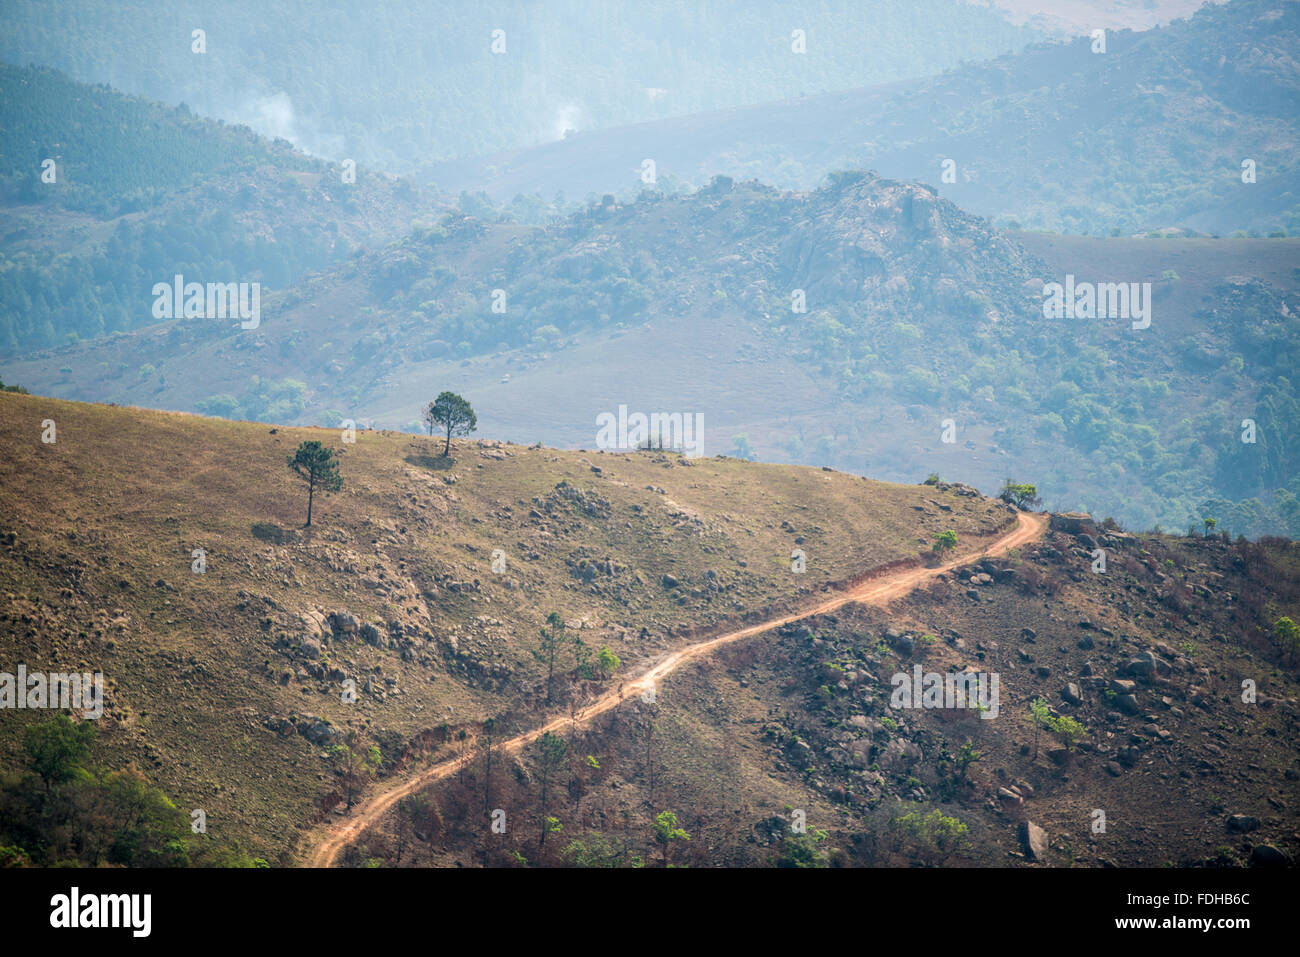 Bergen und Feldern im Mlilwane Wildlife Sanctuary in Swasiland, Afrika. Stockfoto